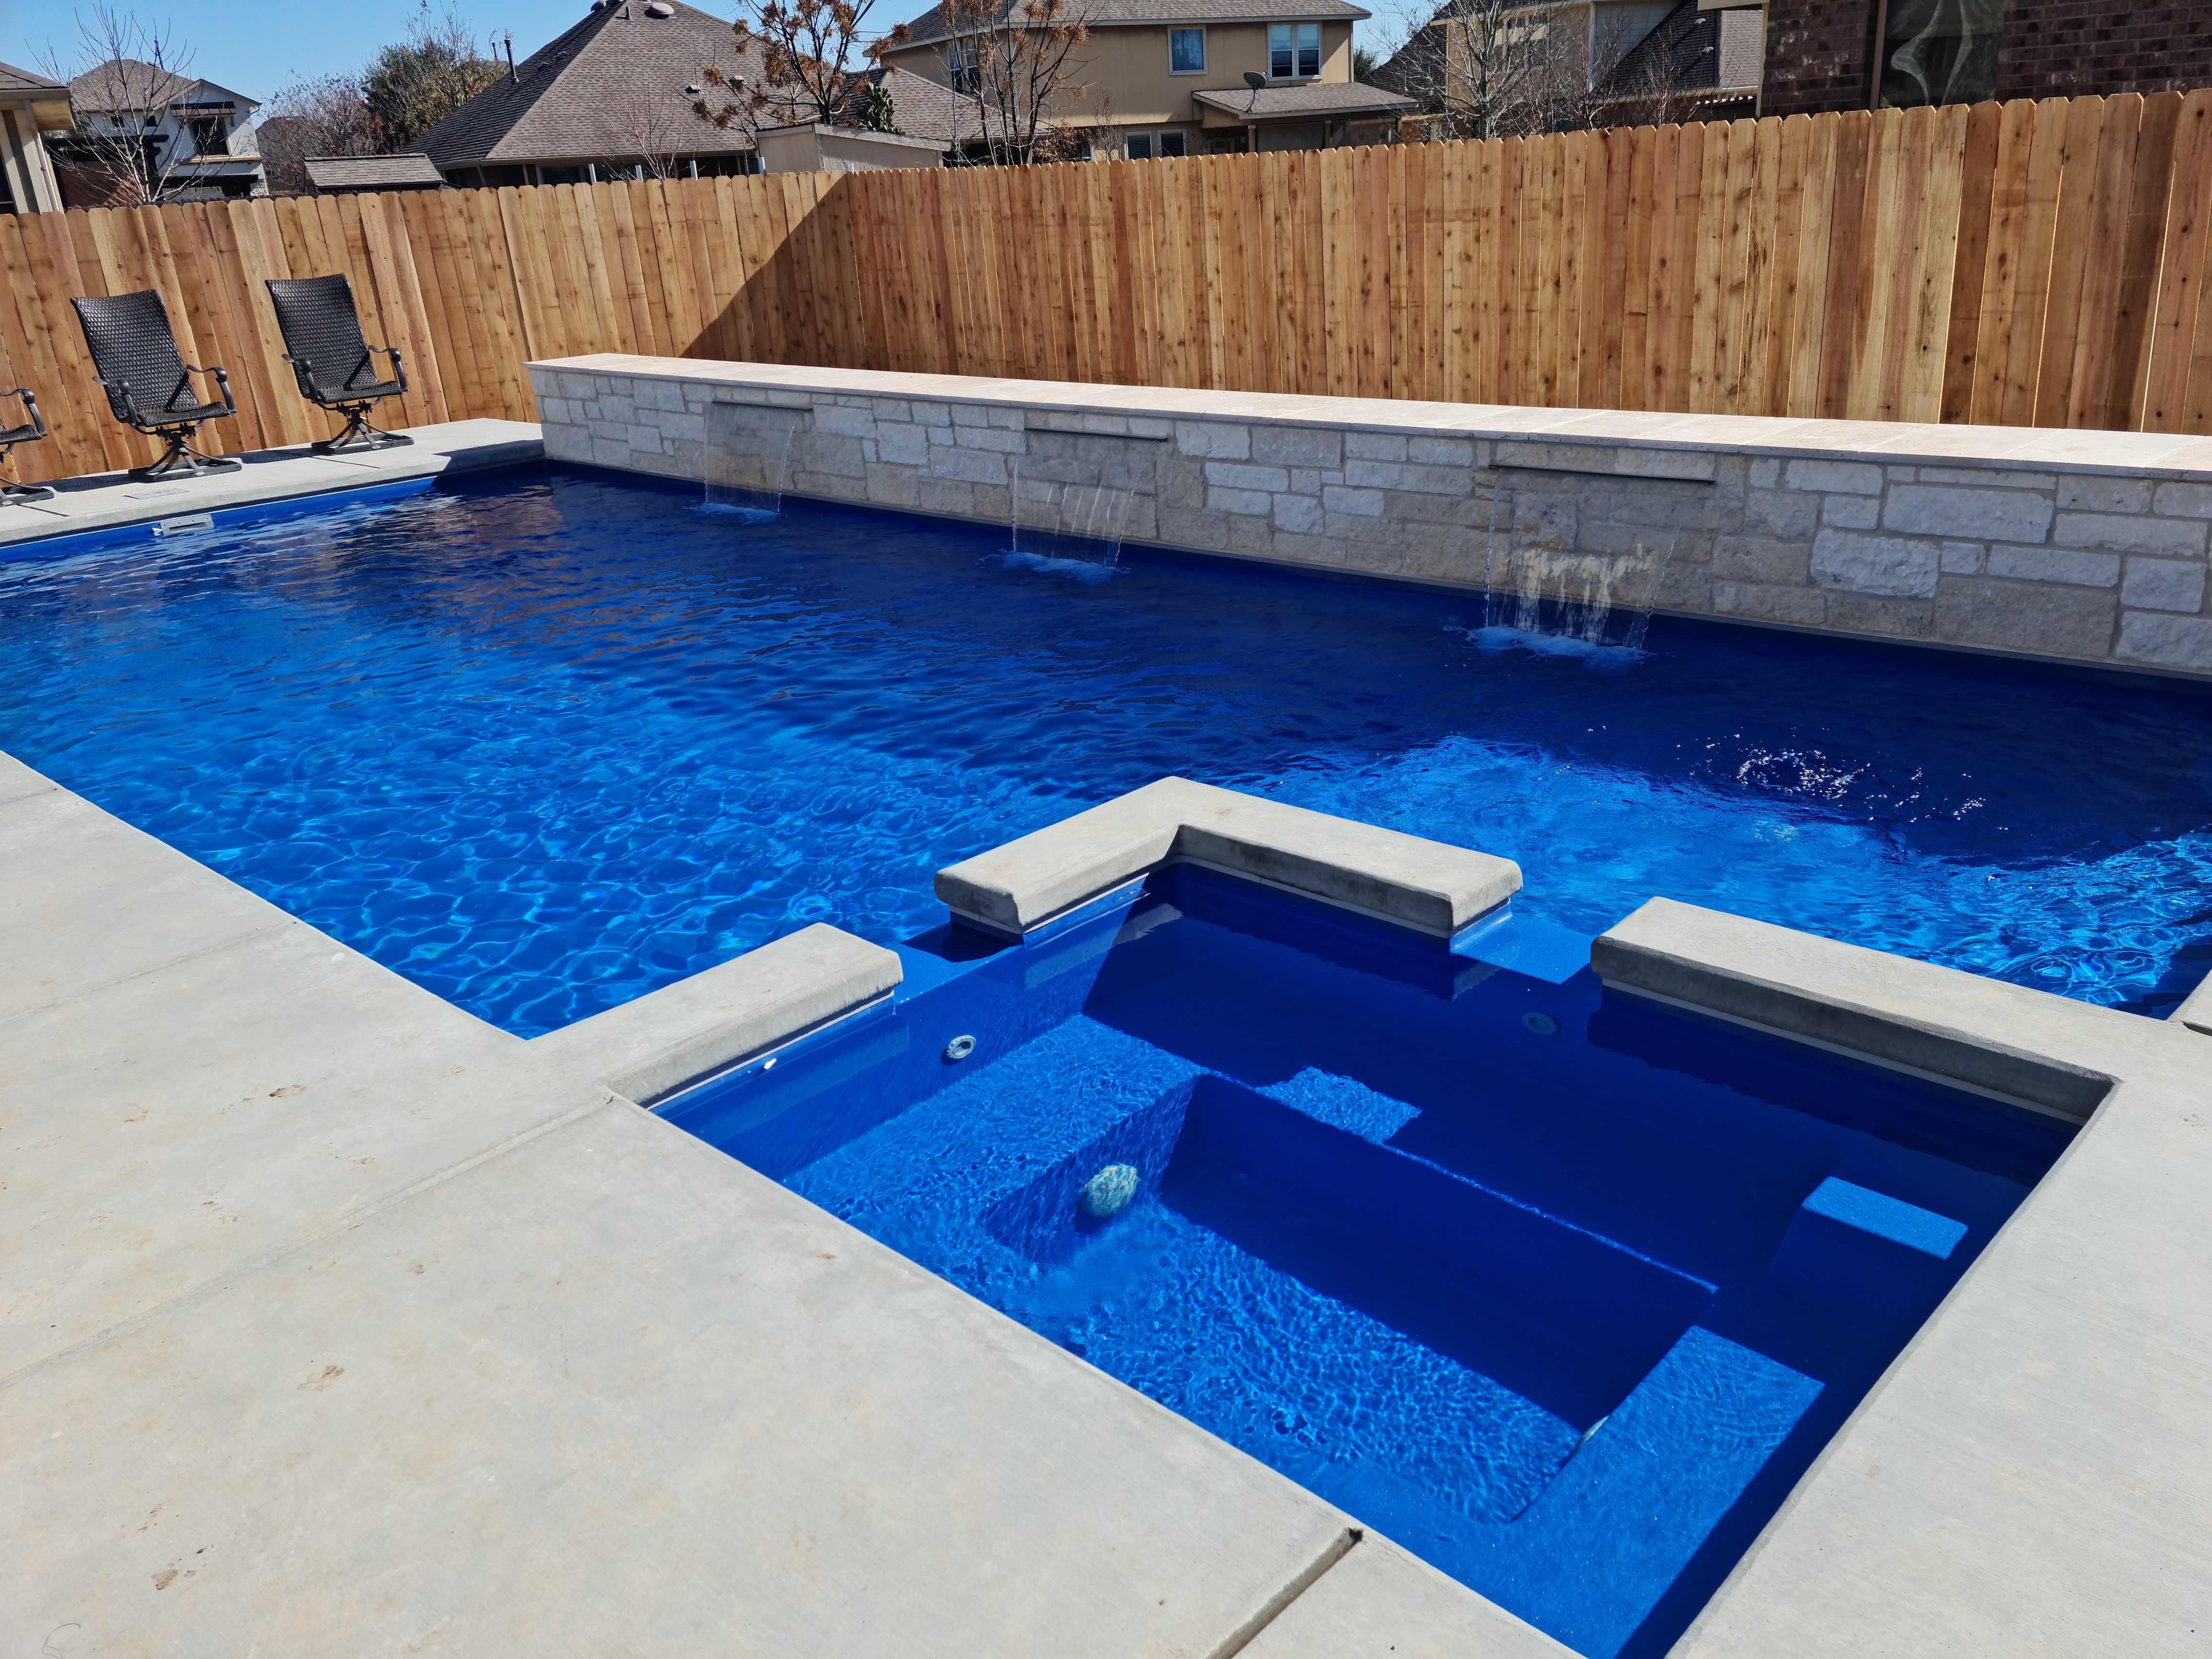 Intrigue 35 model fiberglass pool from Aquamarine Pools